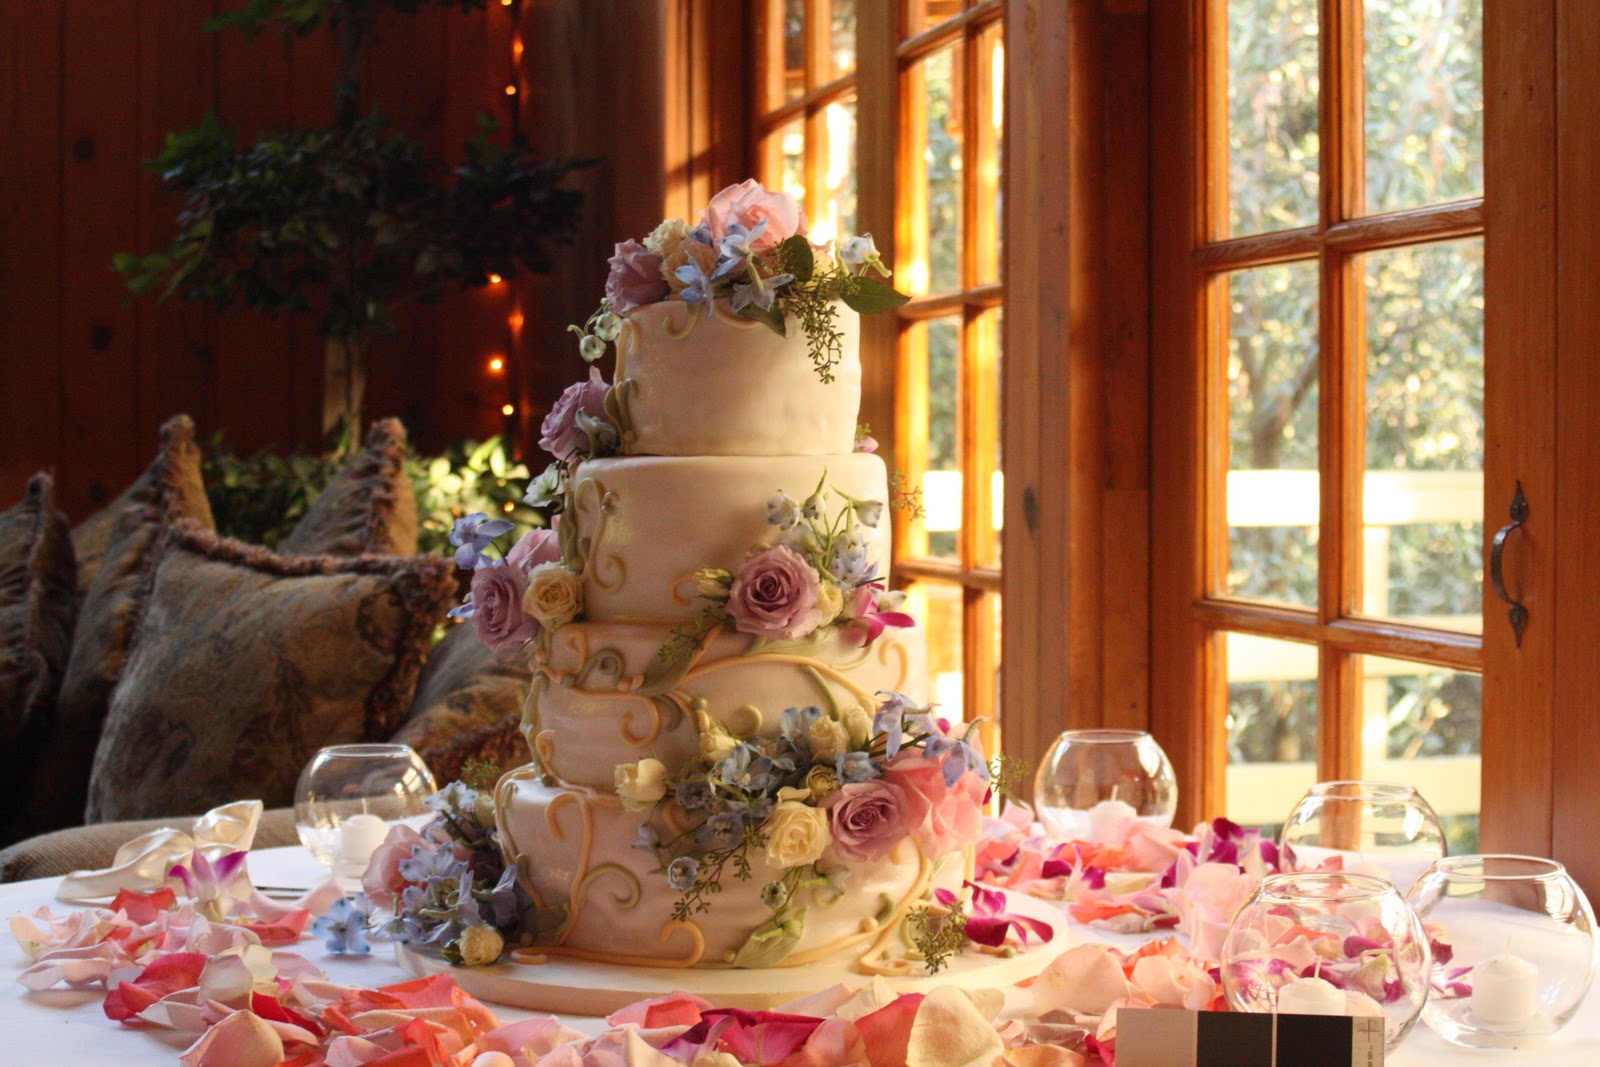 Pastries By Vreeke Ventura  County  Wedding  Locations